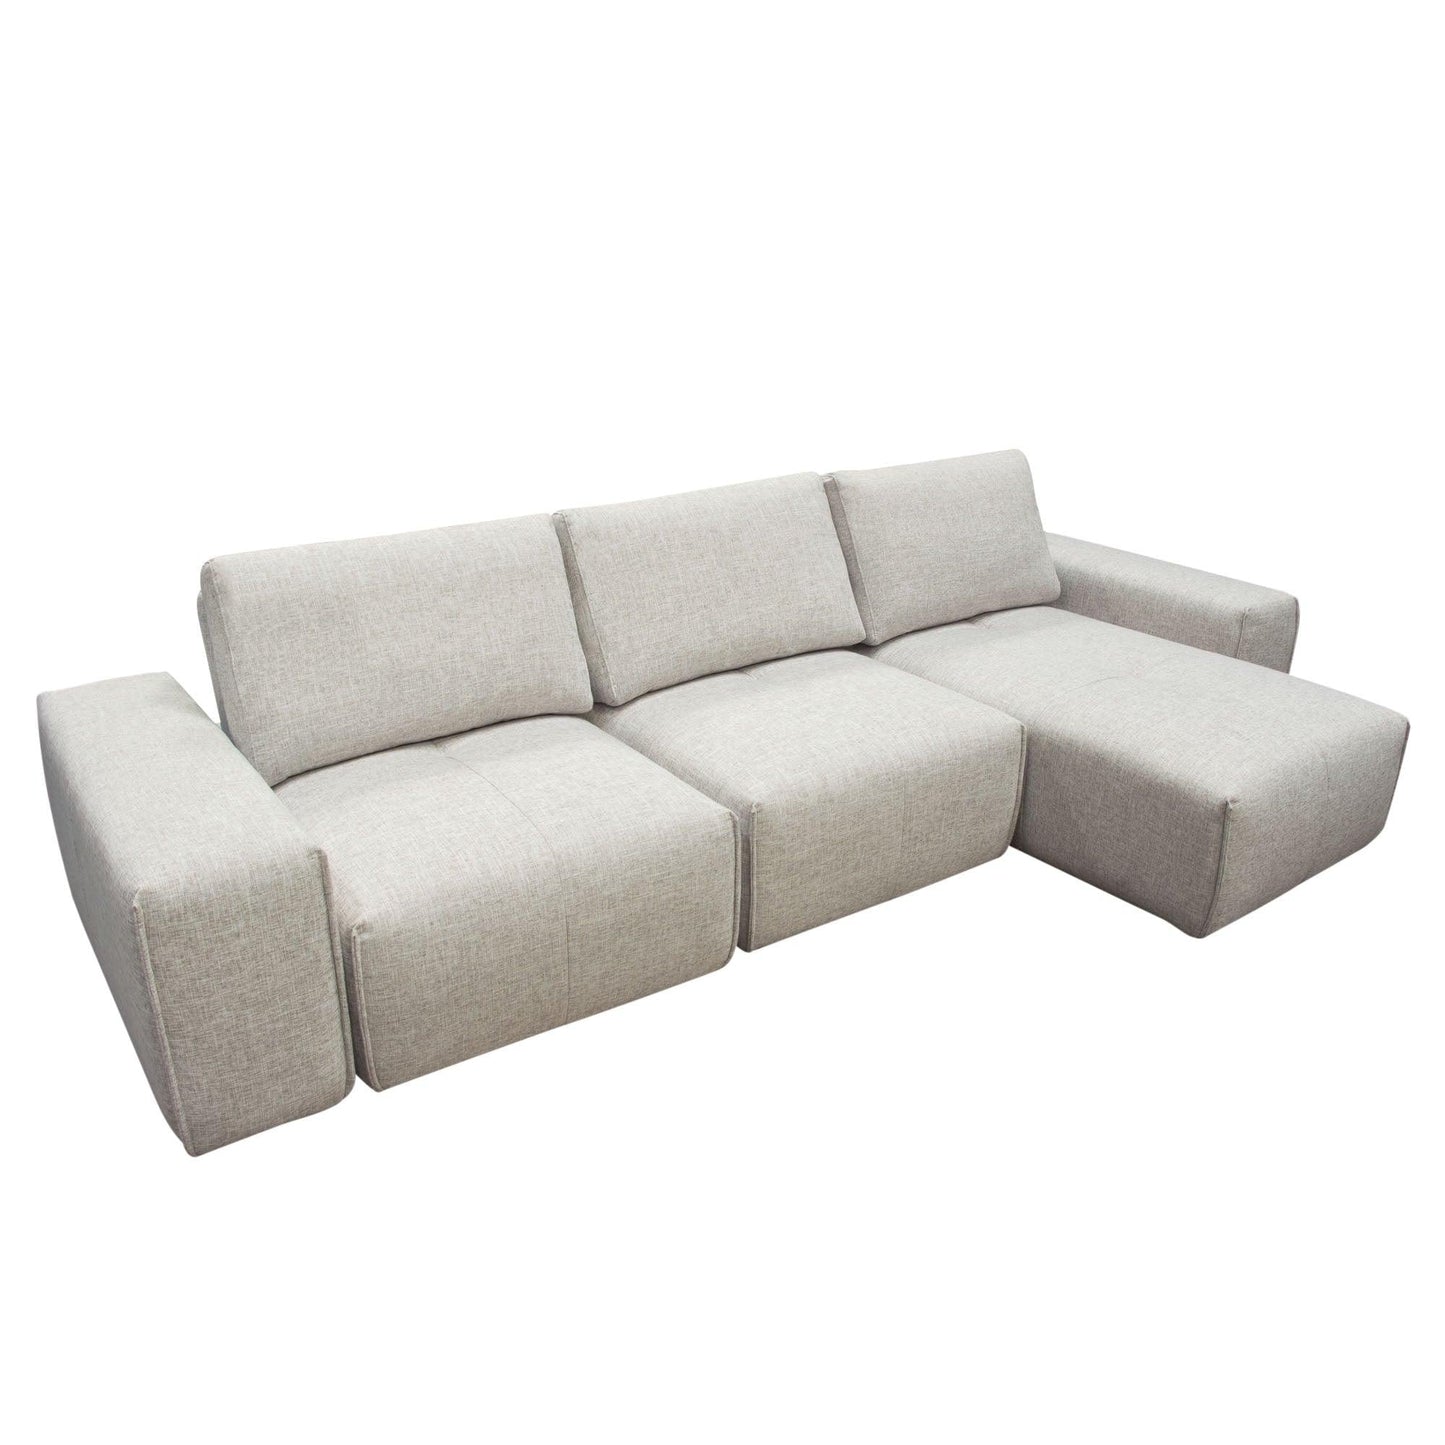 dionefurniture.myshopify.com-Modular Sectional Sofa in Barley Fabric, Dual Position Adjustable Jazz